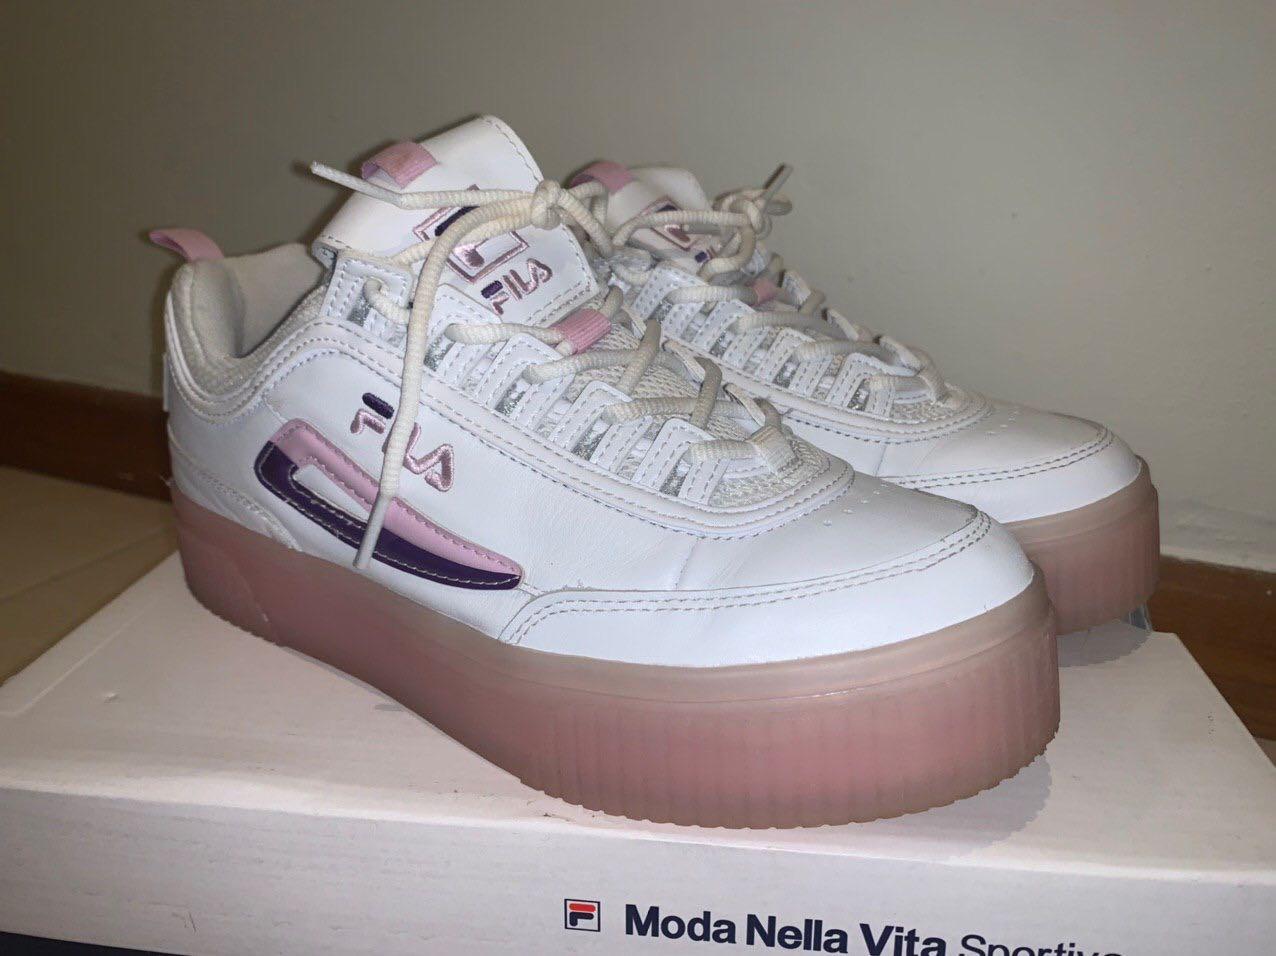 fila platform sneakers pink